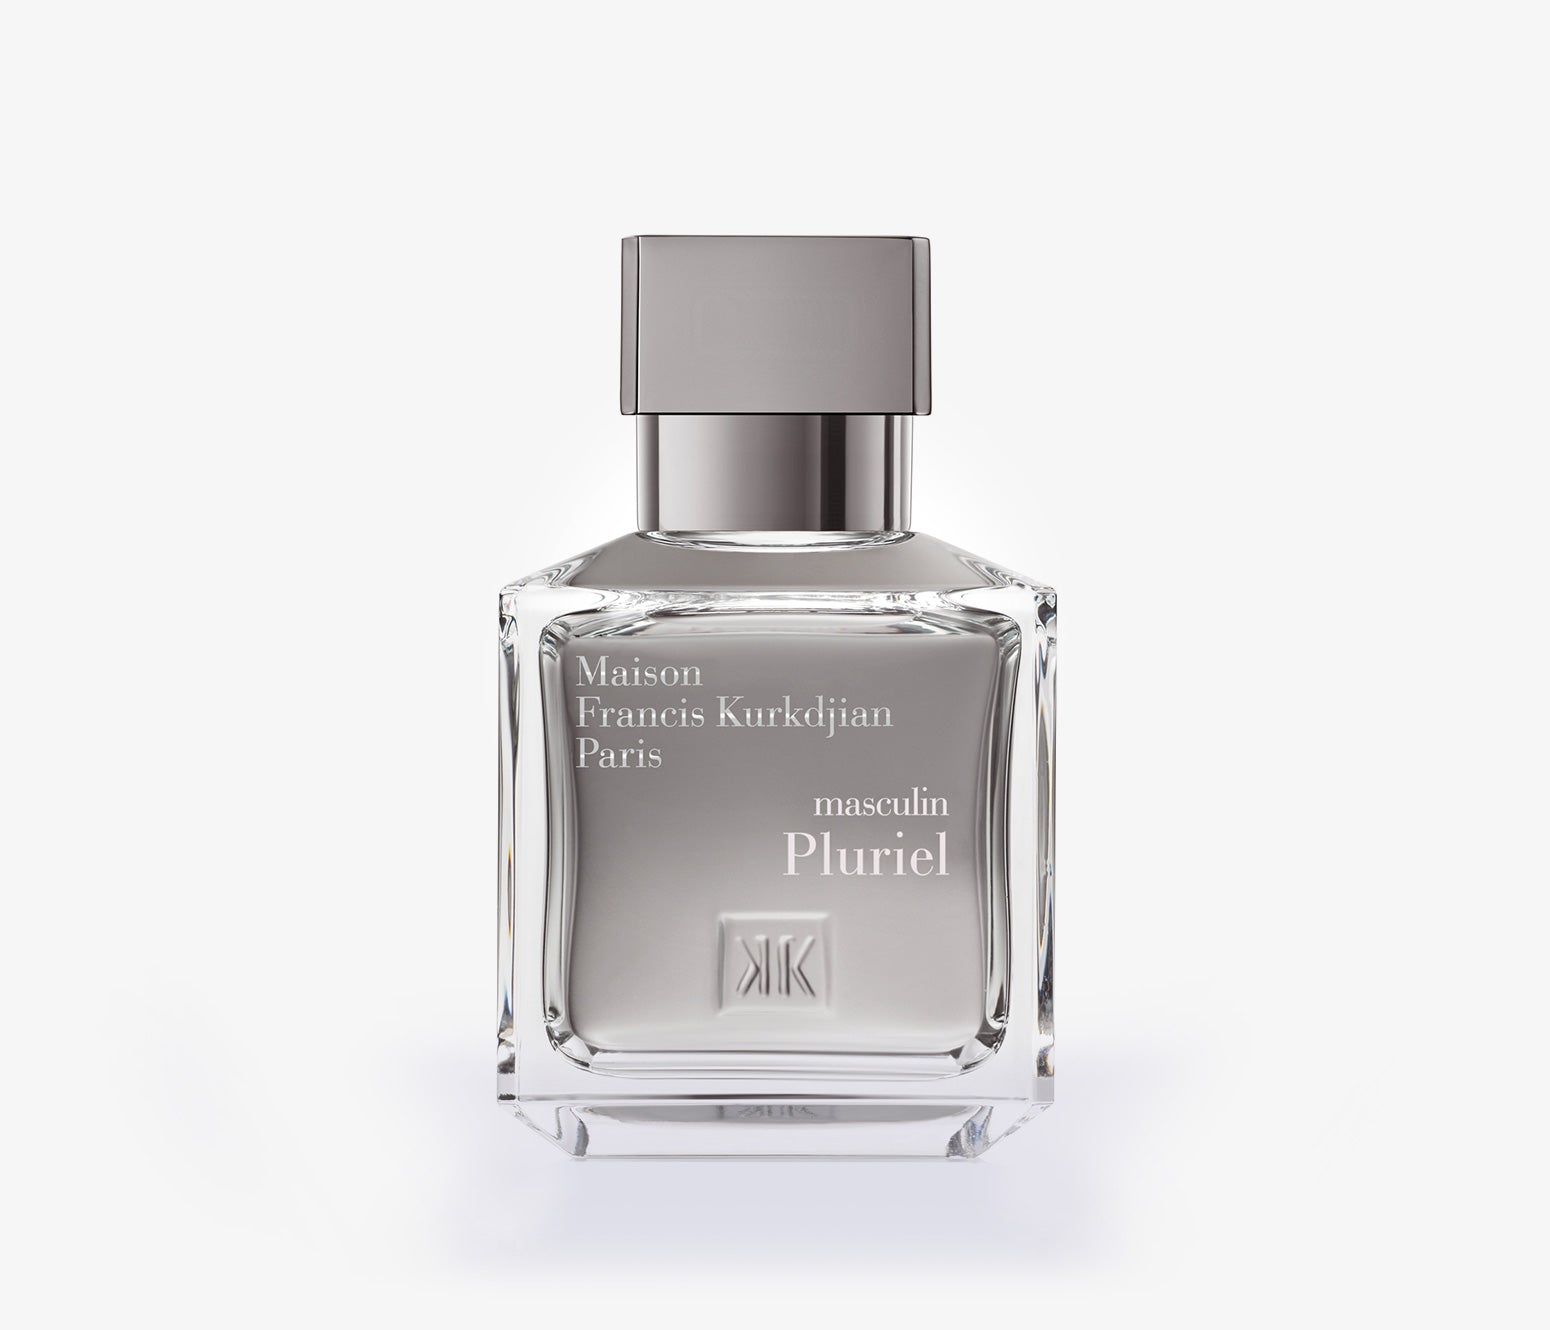 Maison Francis Kurkdjian - Pluriel Masculin - 70ml - ZRP001 - Product Image - Fragrance - Les Senteurs